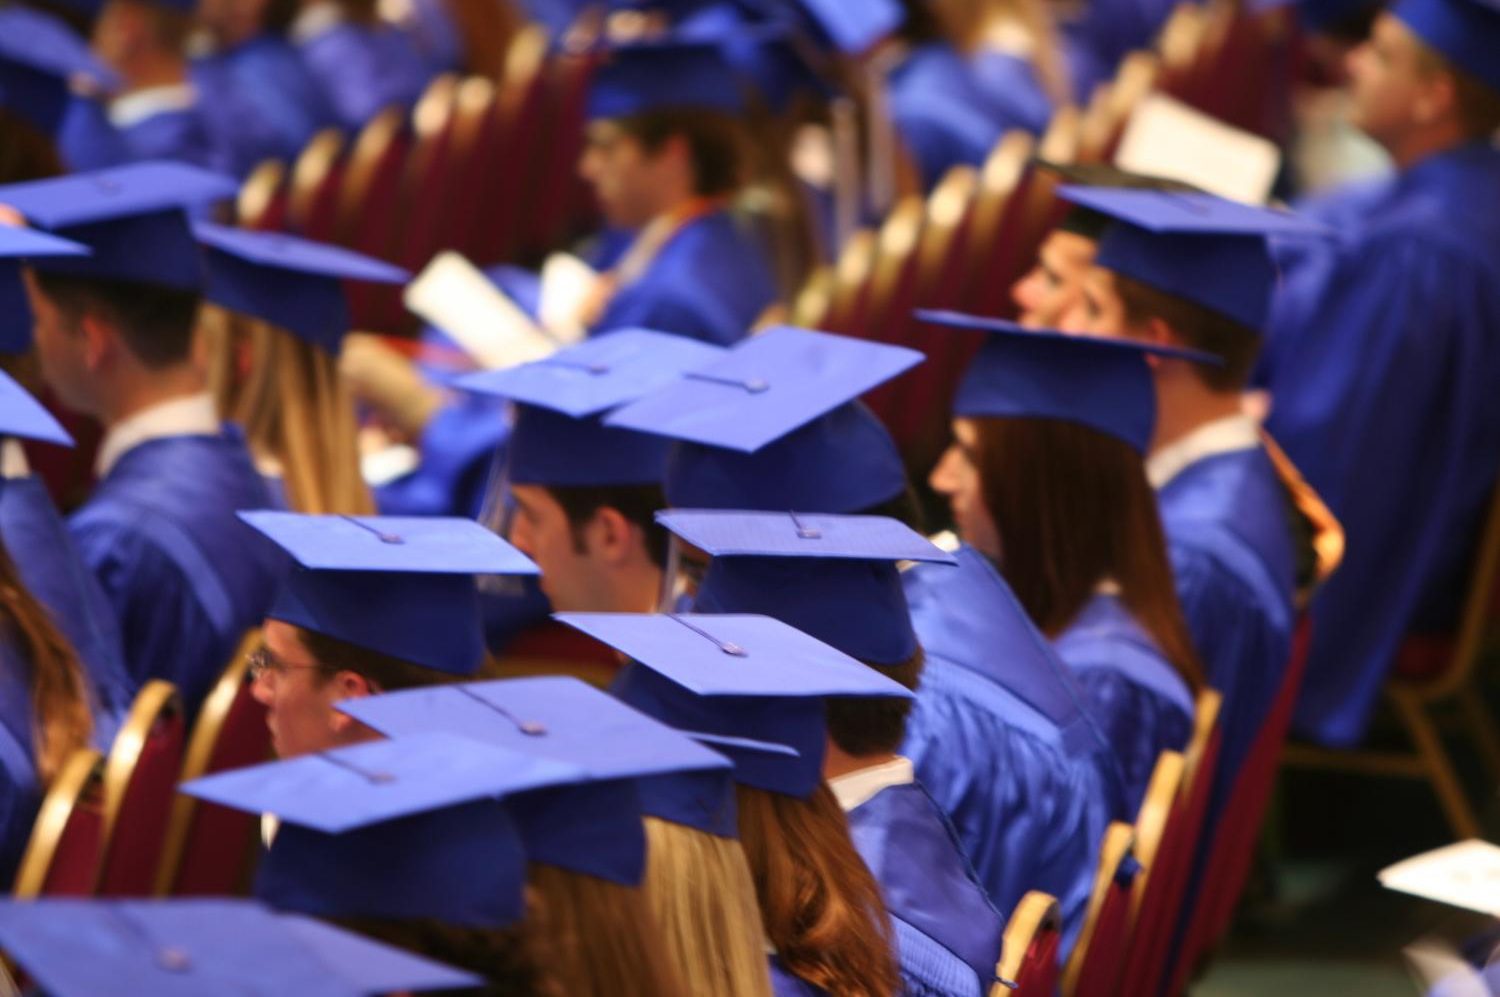 Michigan may change graduation requirements